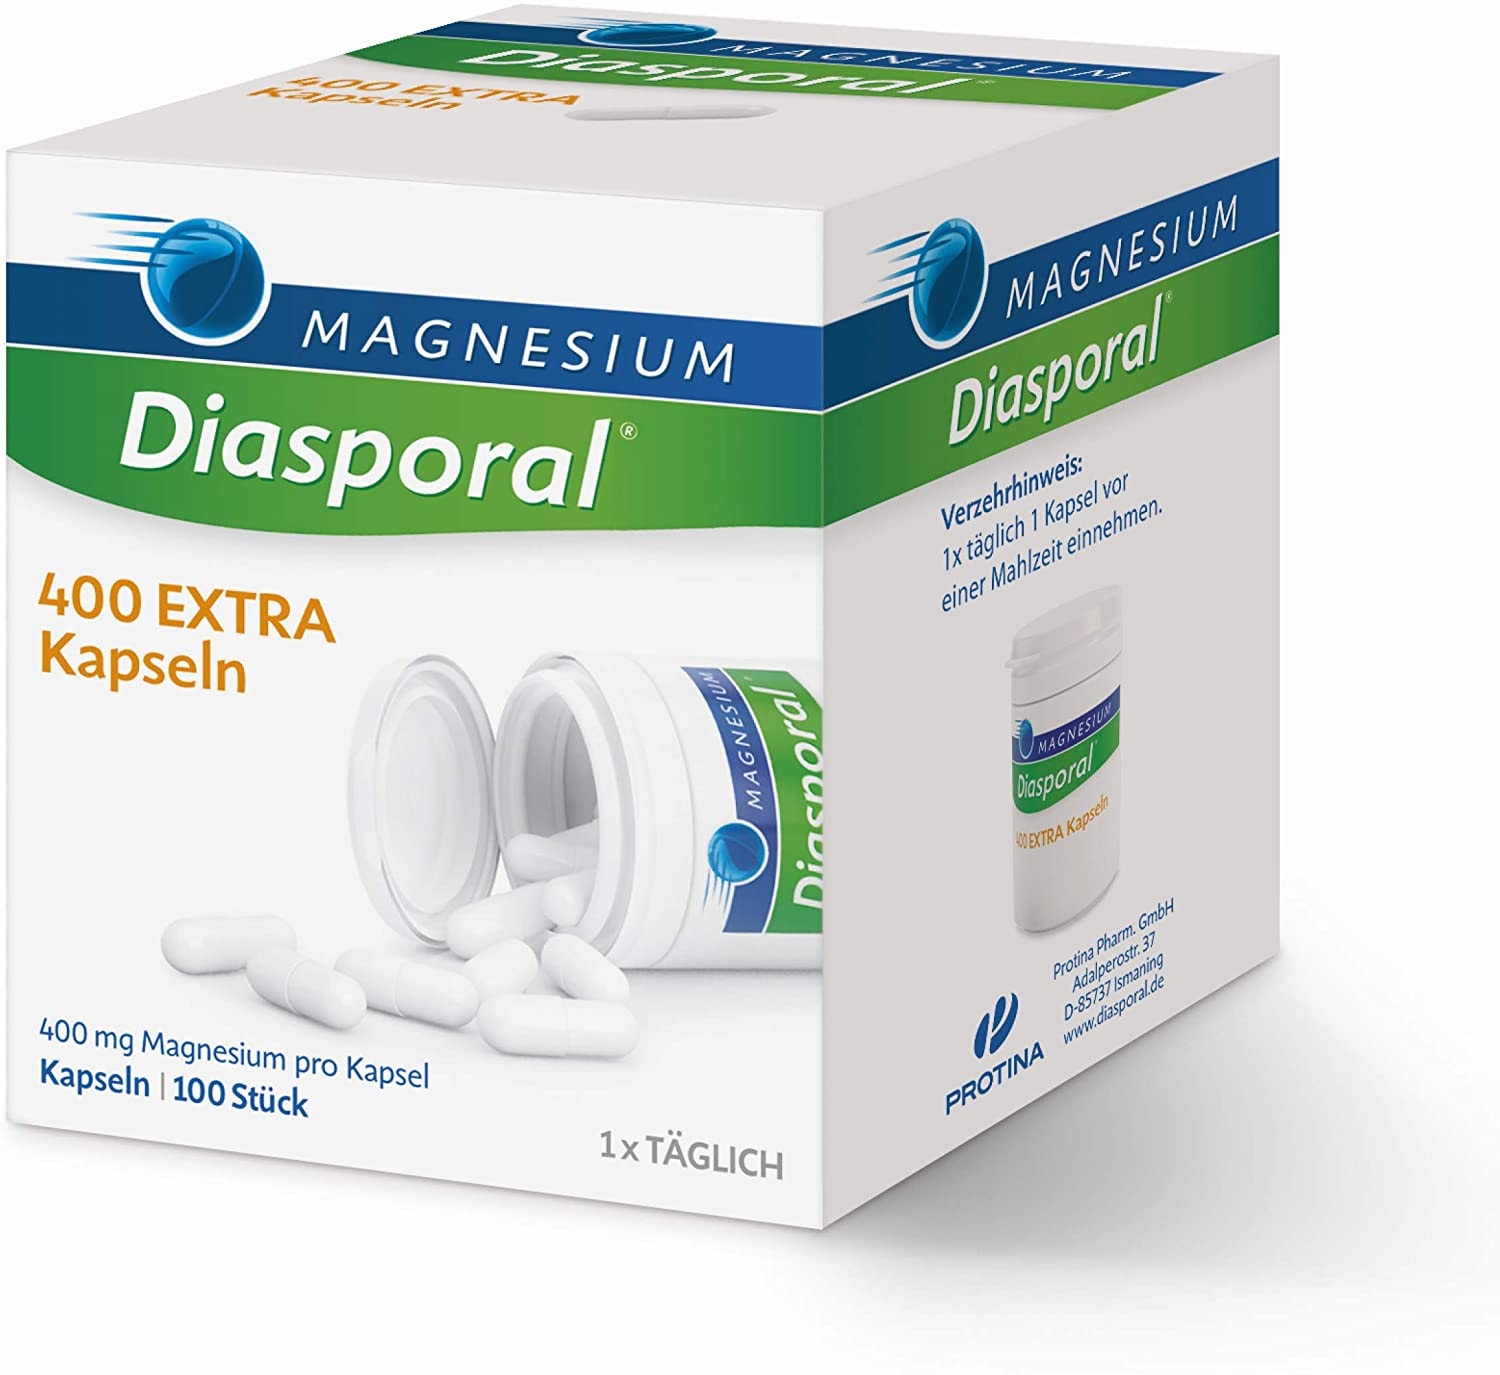 Magnesium-Diasporal 400 EXTRA Kapseln: Das Magnesium der EXTRA-KLASSE mit 400 mg Magnesium pro Kapsel, 100 Stück